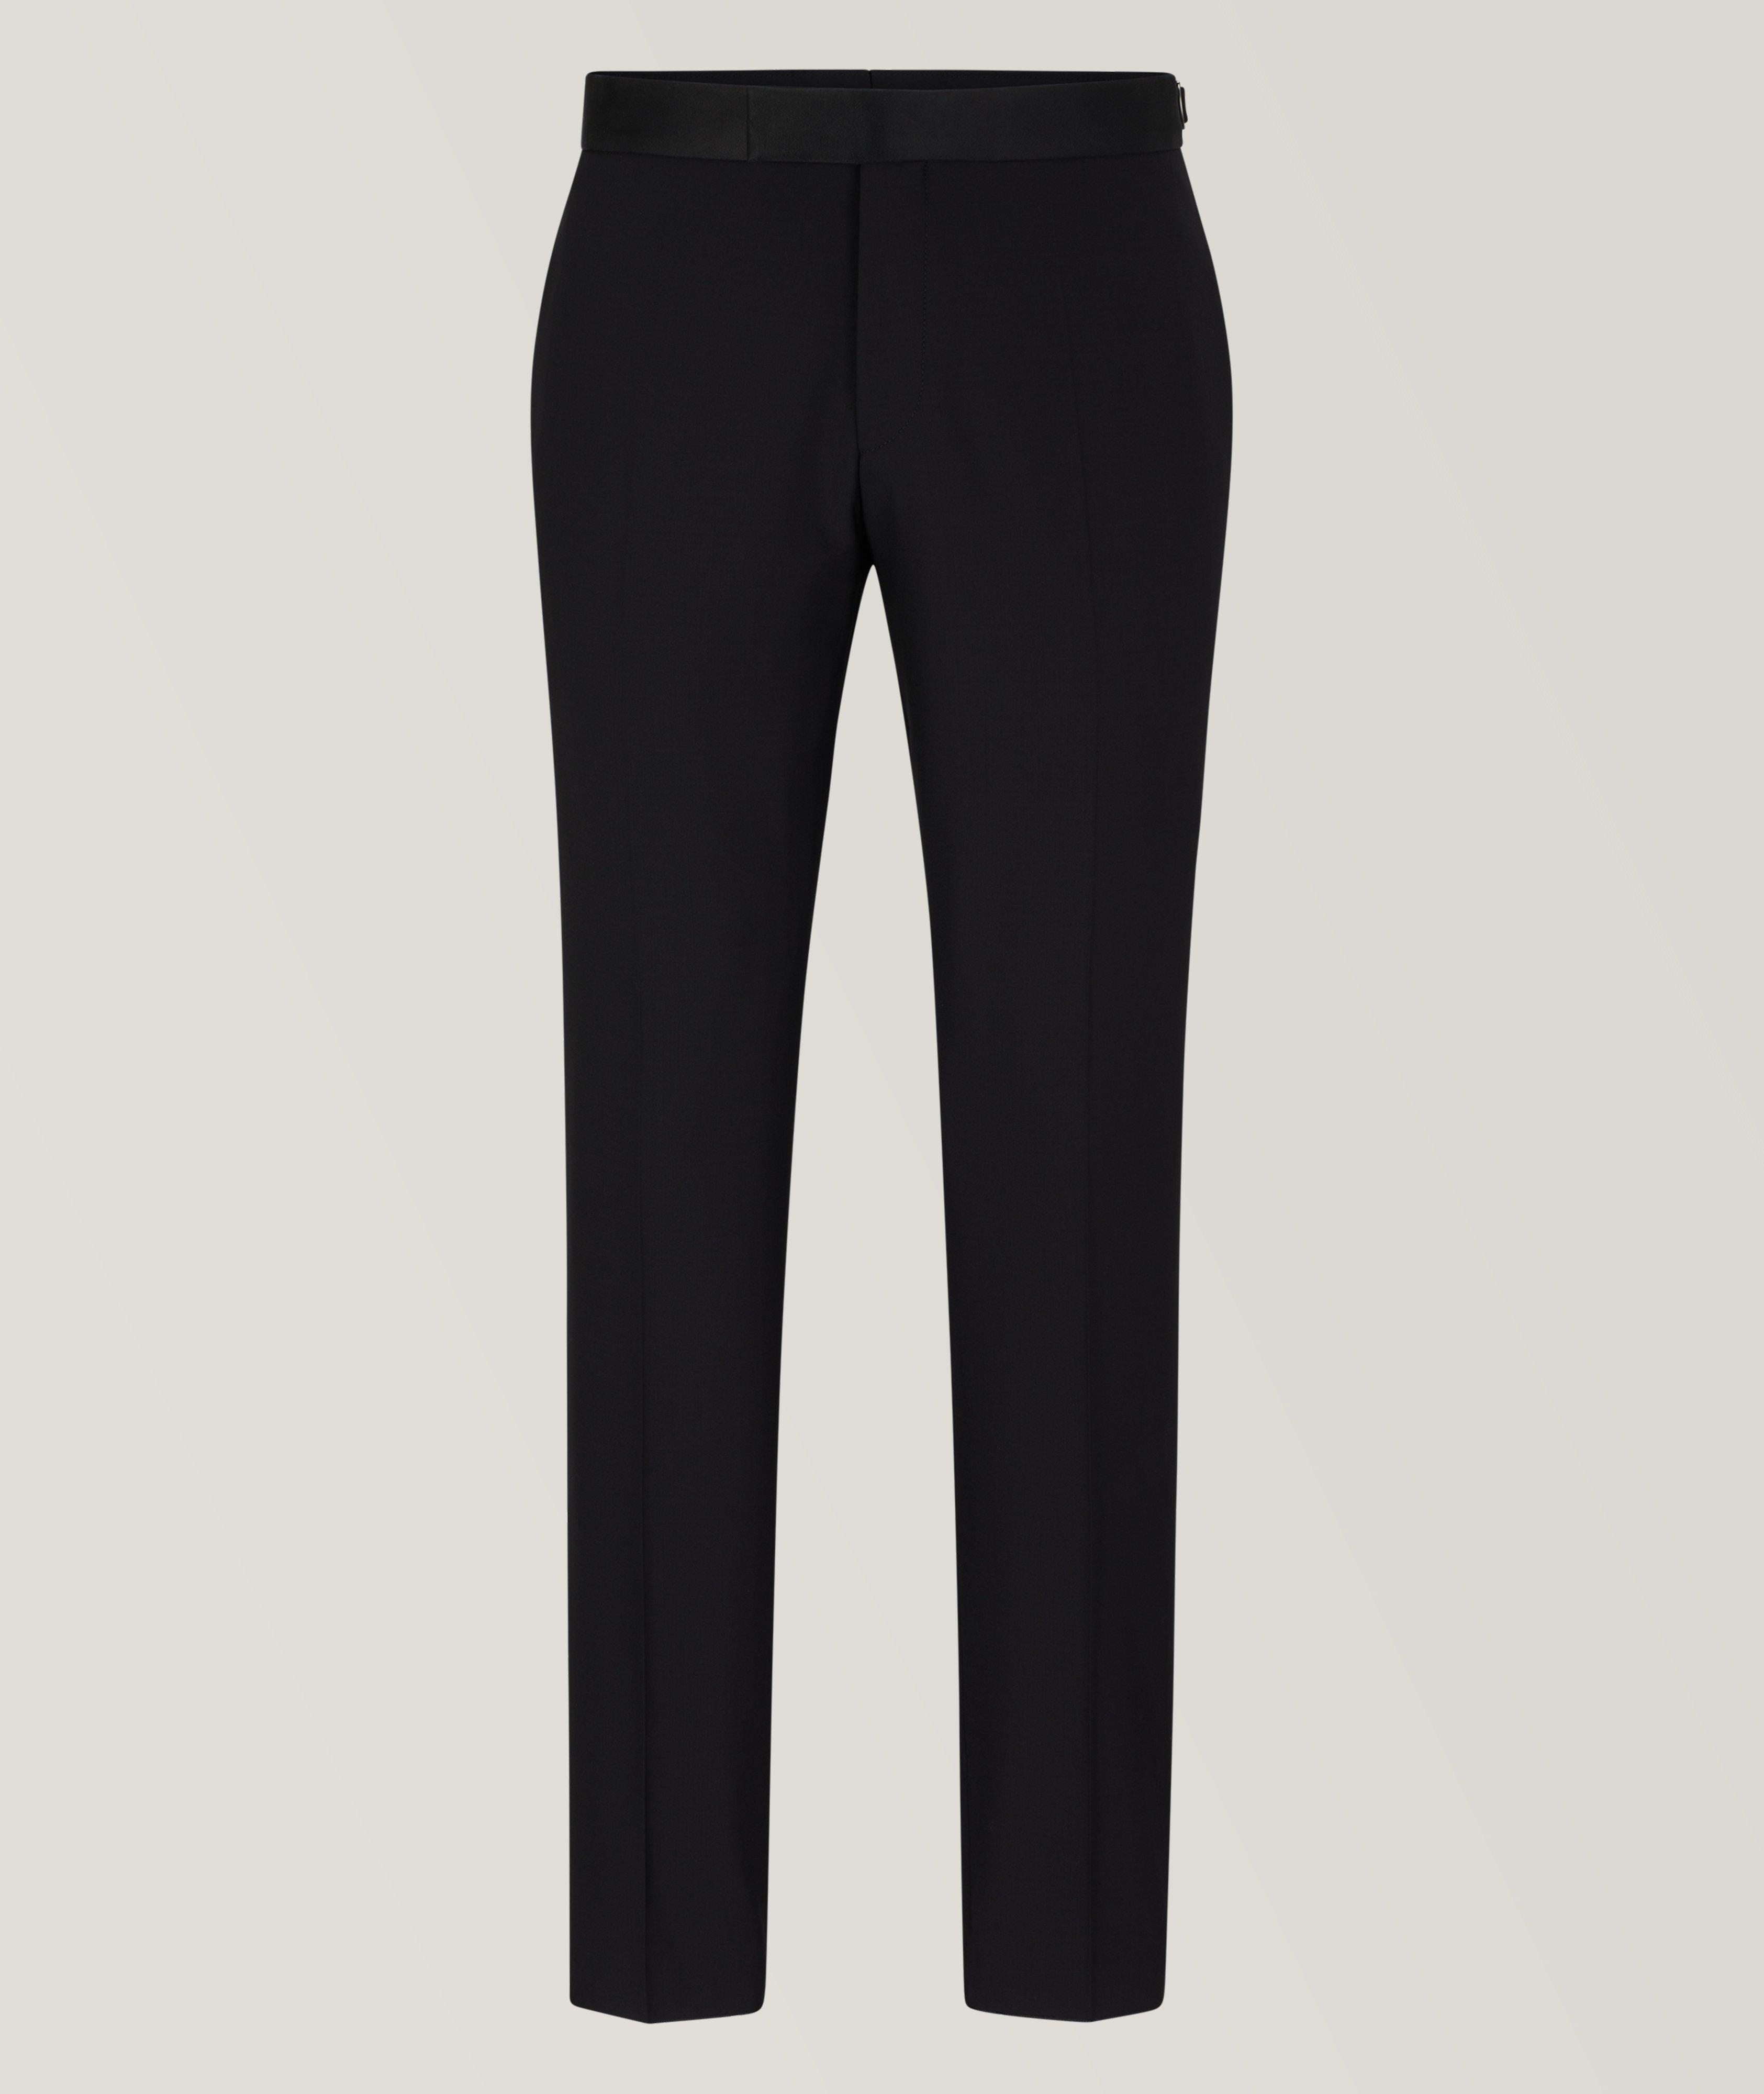 Slim-Fit Stretch-Wool Tuxedo Pants image 0